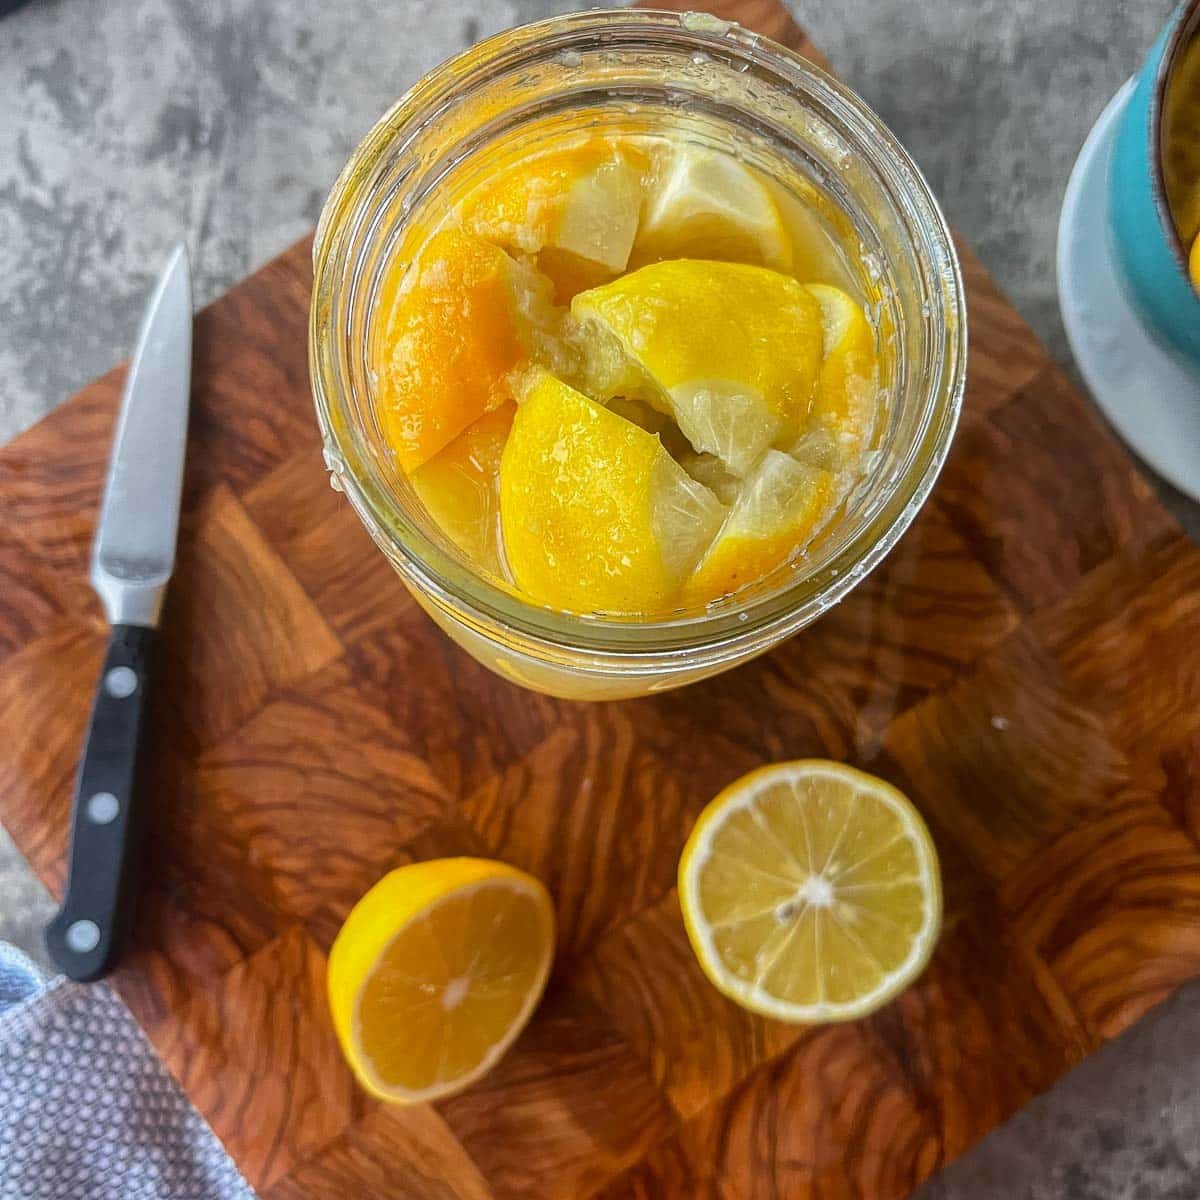 sliced lemons in a jar with a sliced lemon next to it